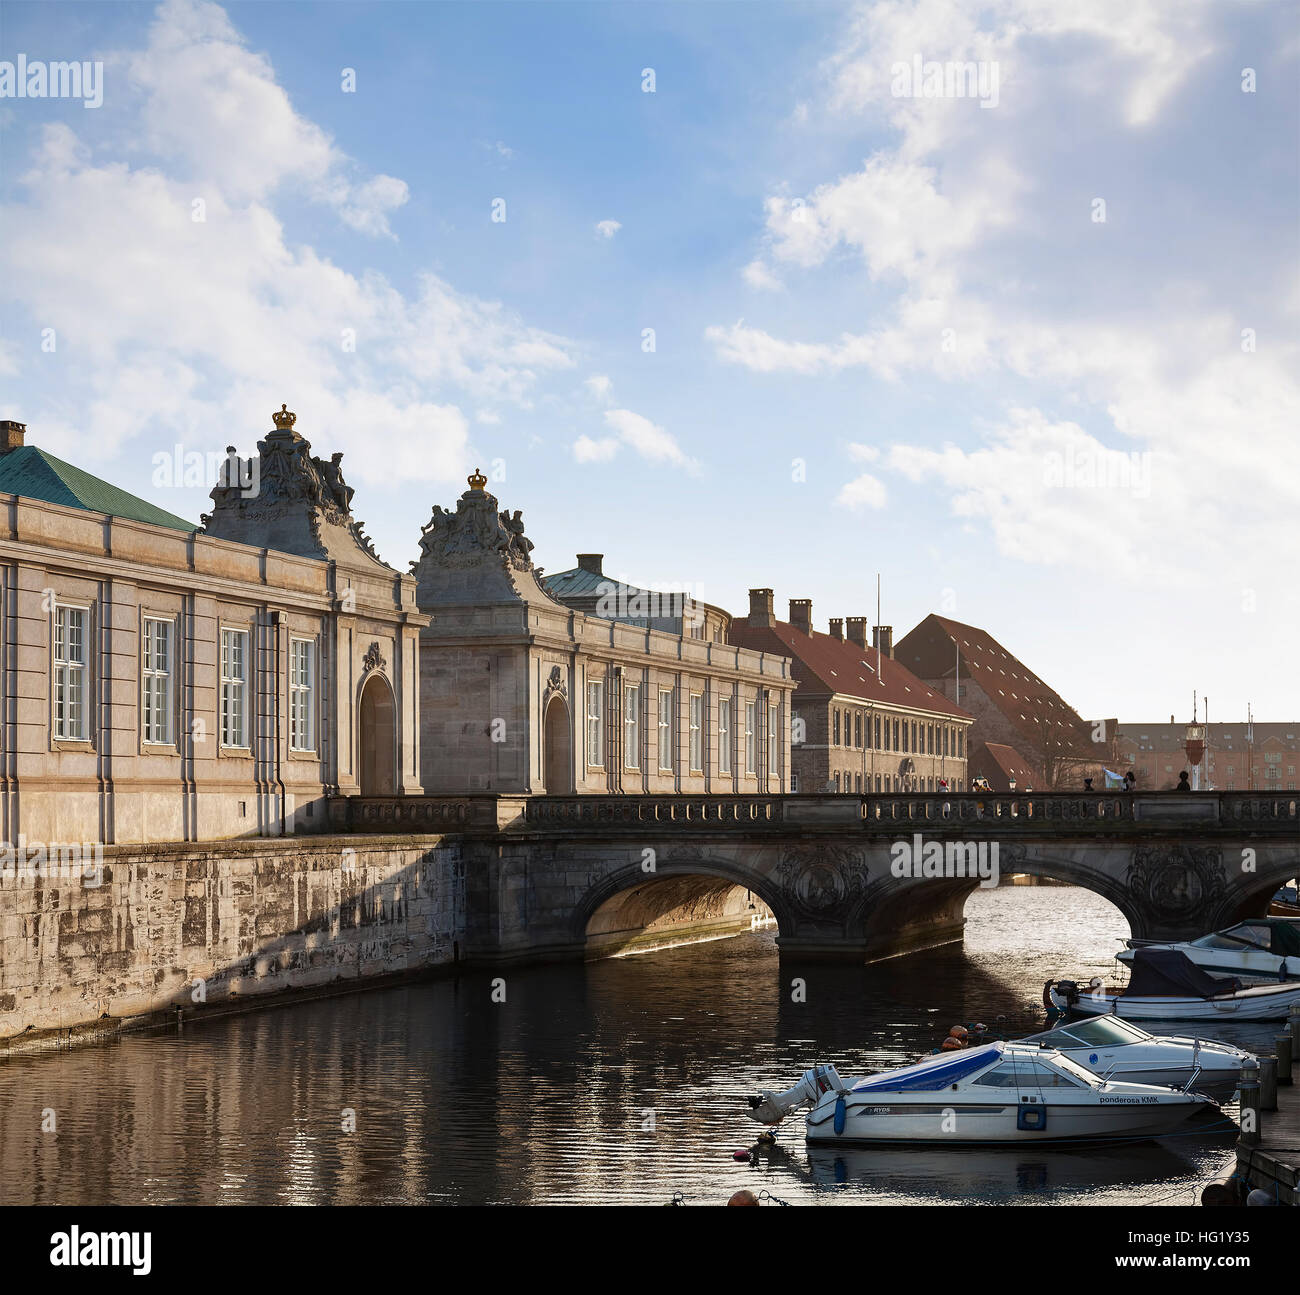 KOPENHAGEN, DÄNEMARK - 24. DEZEMBER 2016. Touristen auf der Kanalbrücke auf Schloss Christiansborg. Stockfoto